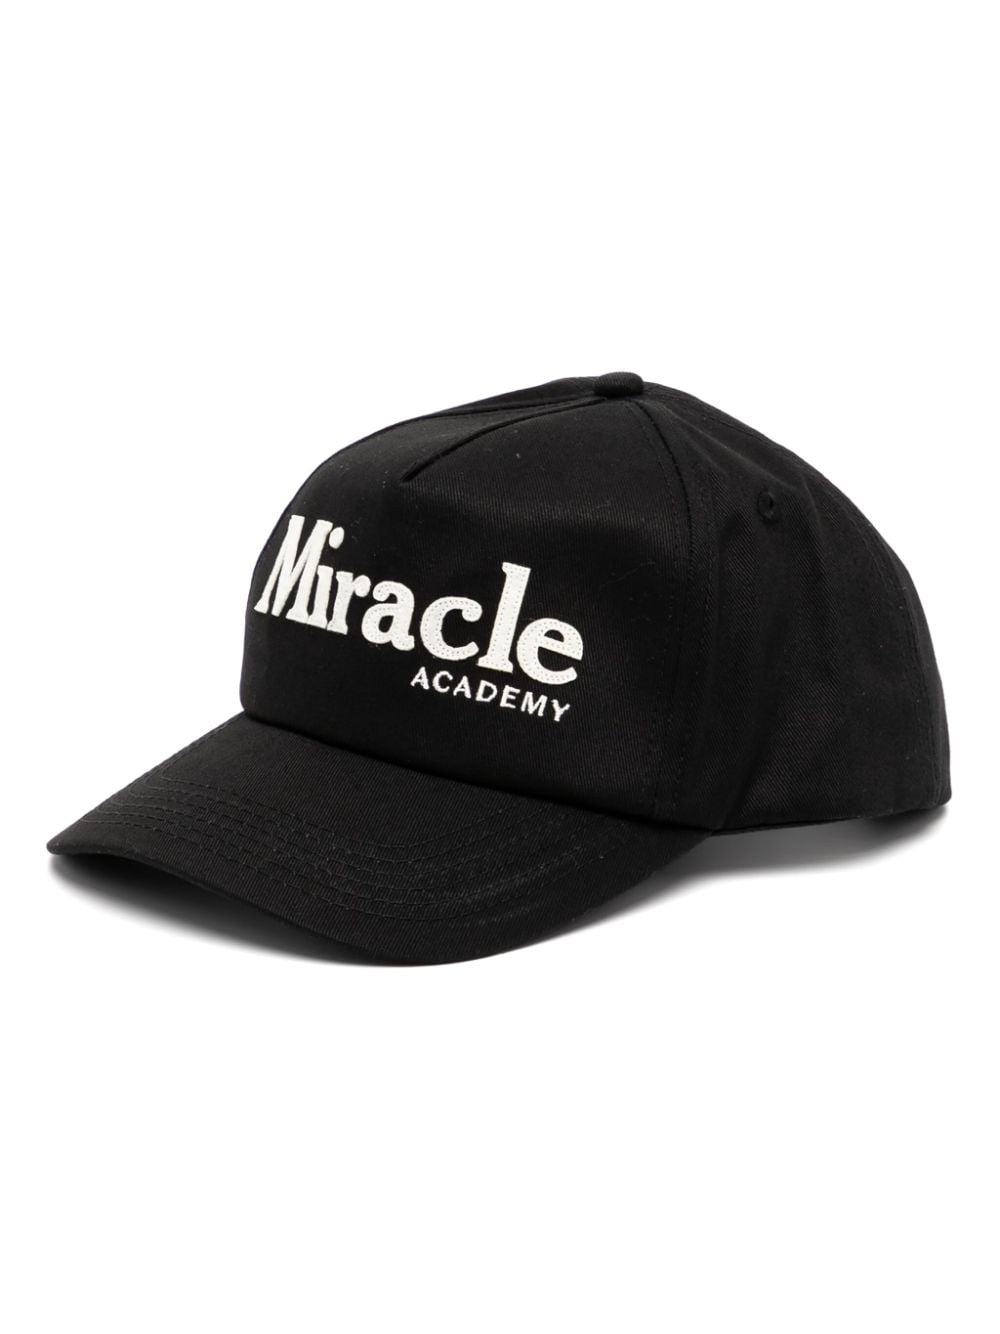 Vintage Miracle Academy baseball cap